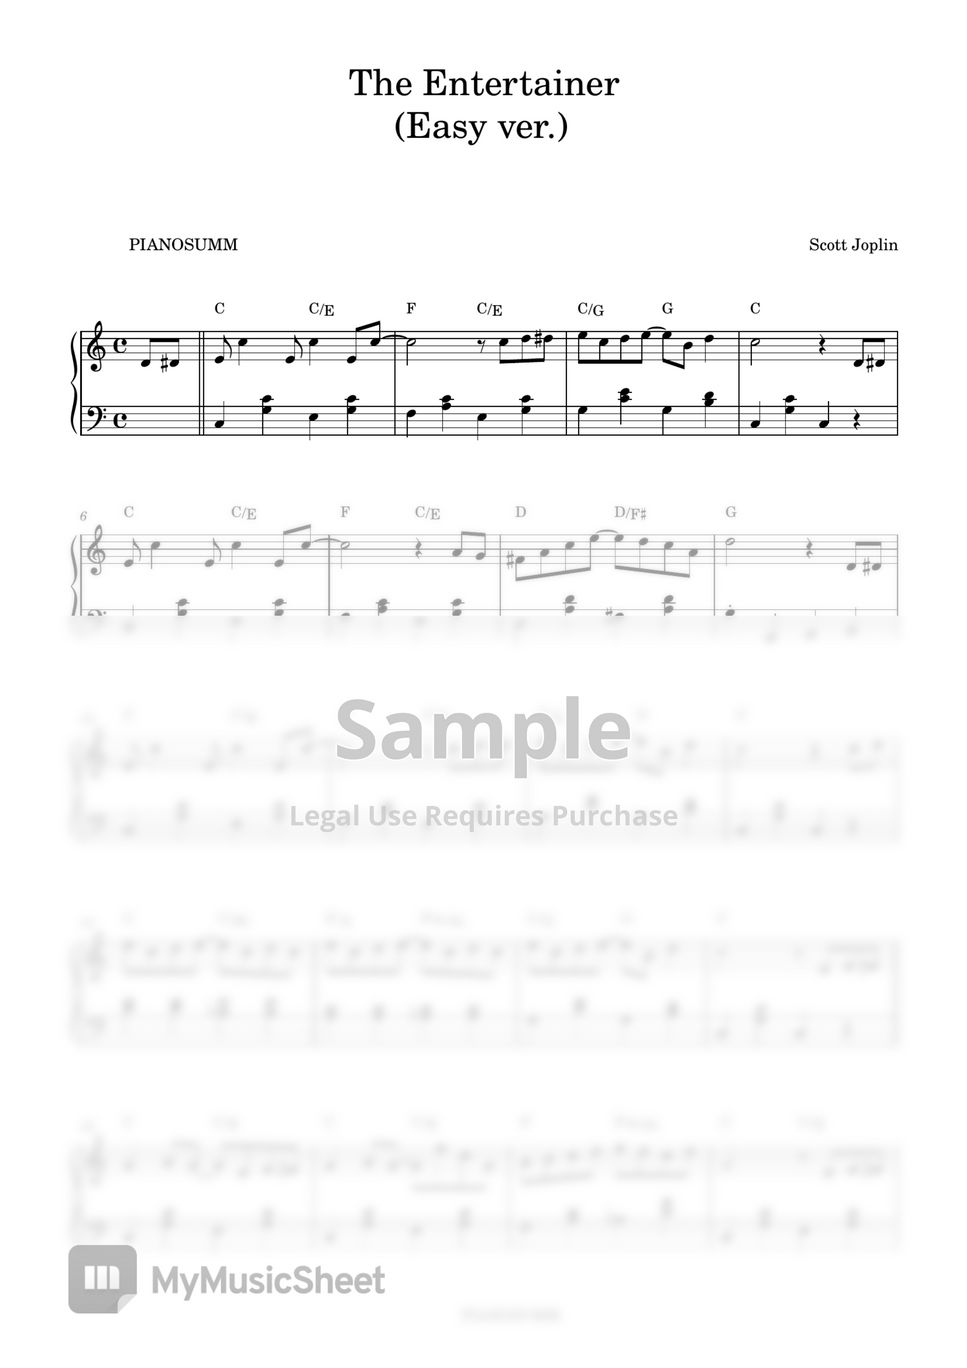 Scott Joplin - The Entertainer (Easy ver.) by PIANOSUMM